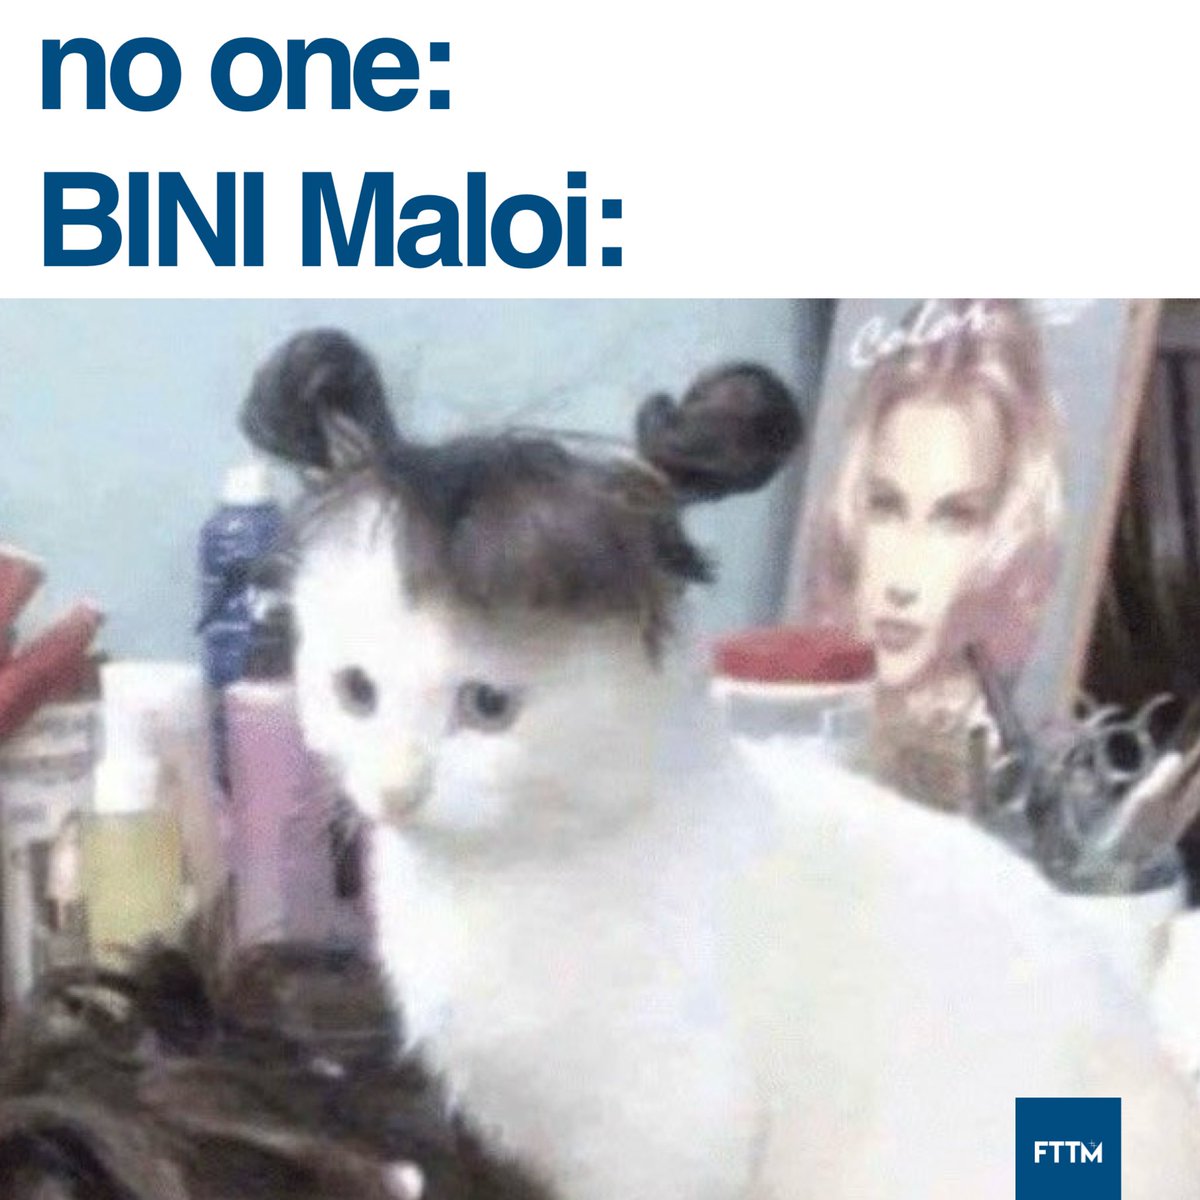 Meowloi ang hairstyle 🐱 @bini_maloi